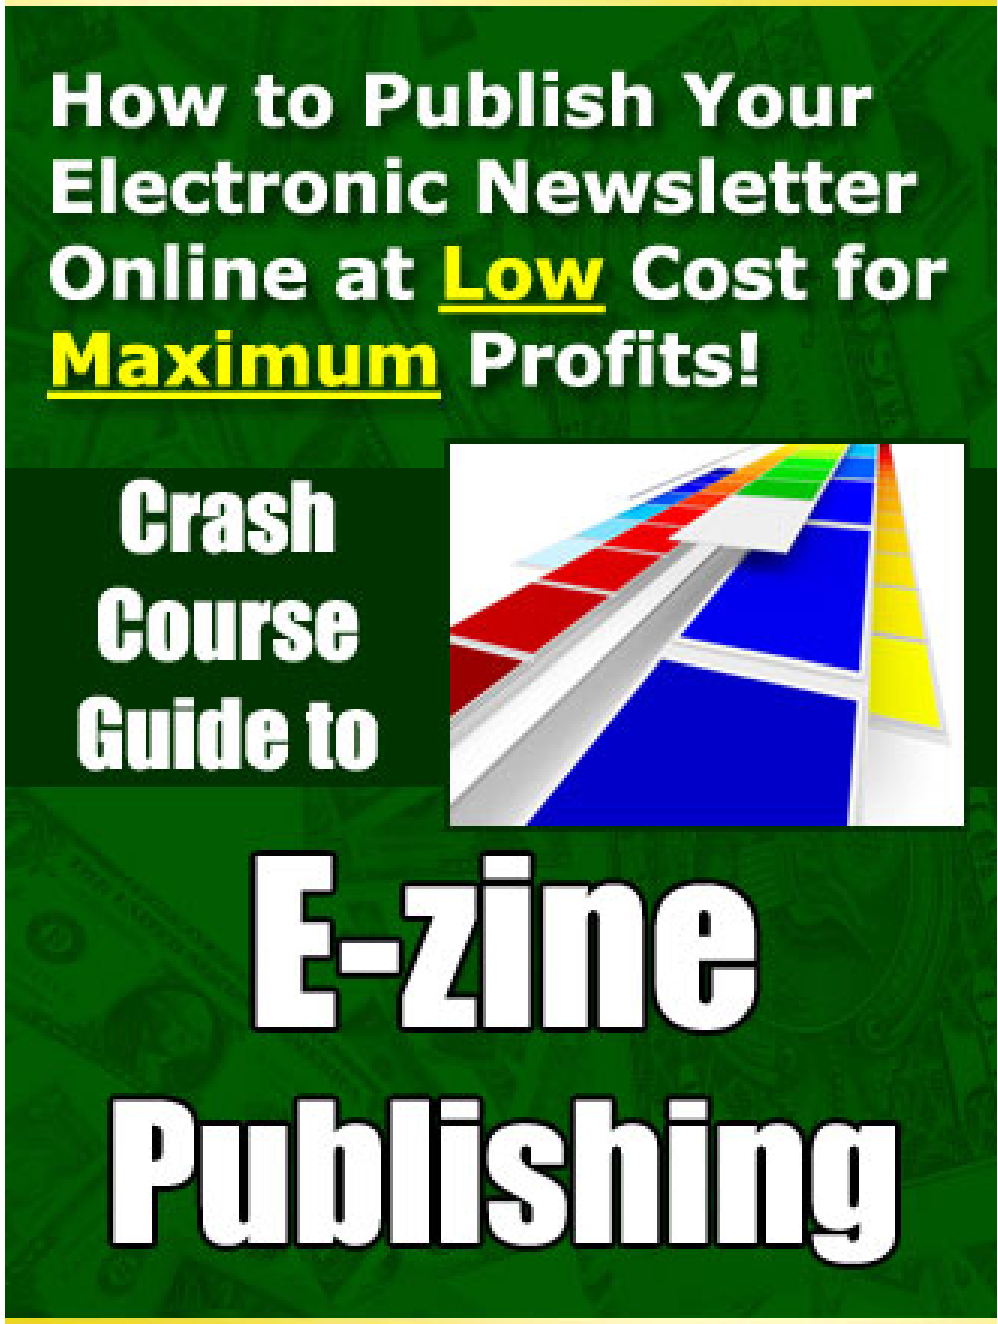 Crash Course Guide to E-Zine Publishing